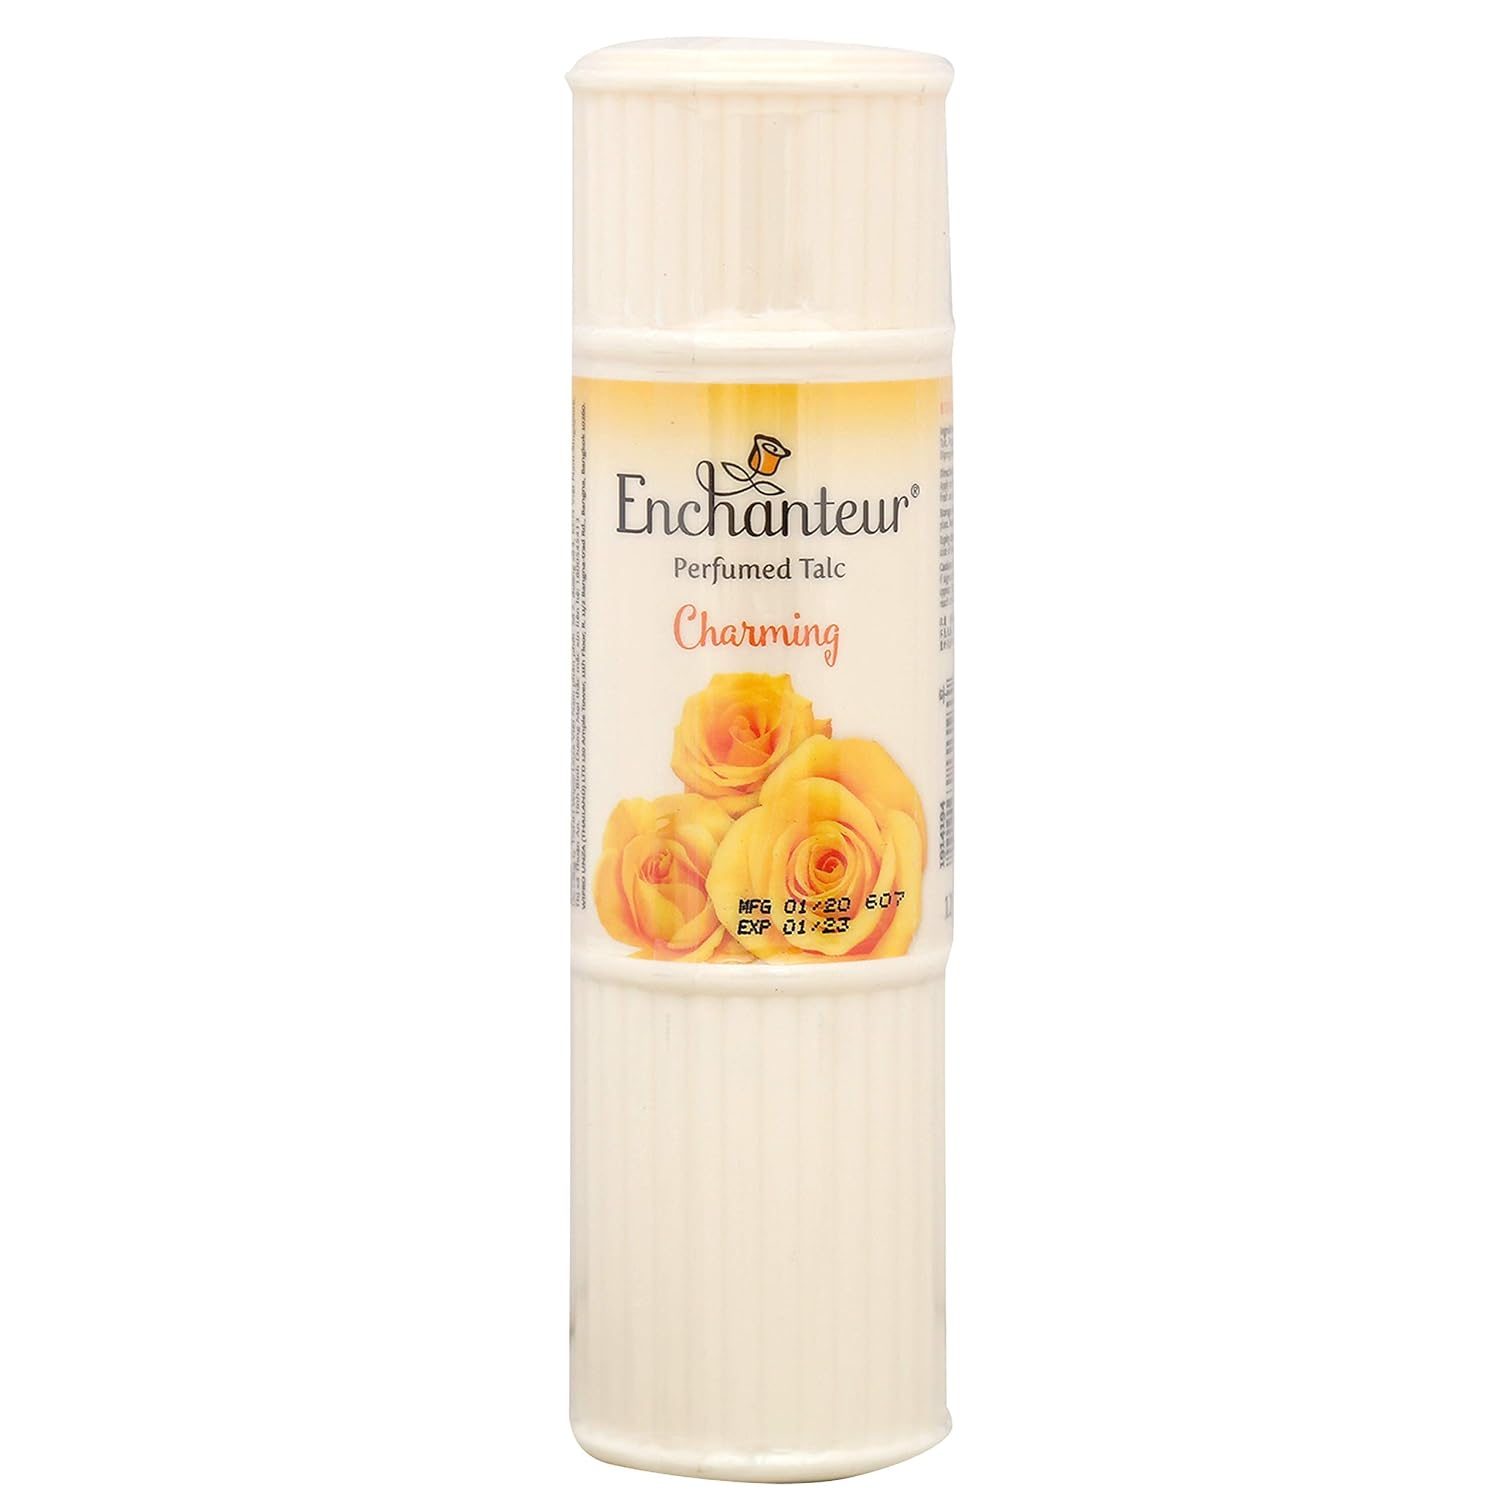 Enchanteur Charming Perfumed Talc Powder 125g